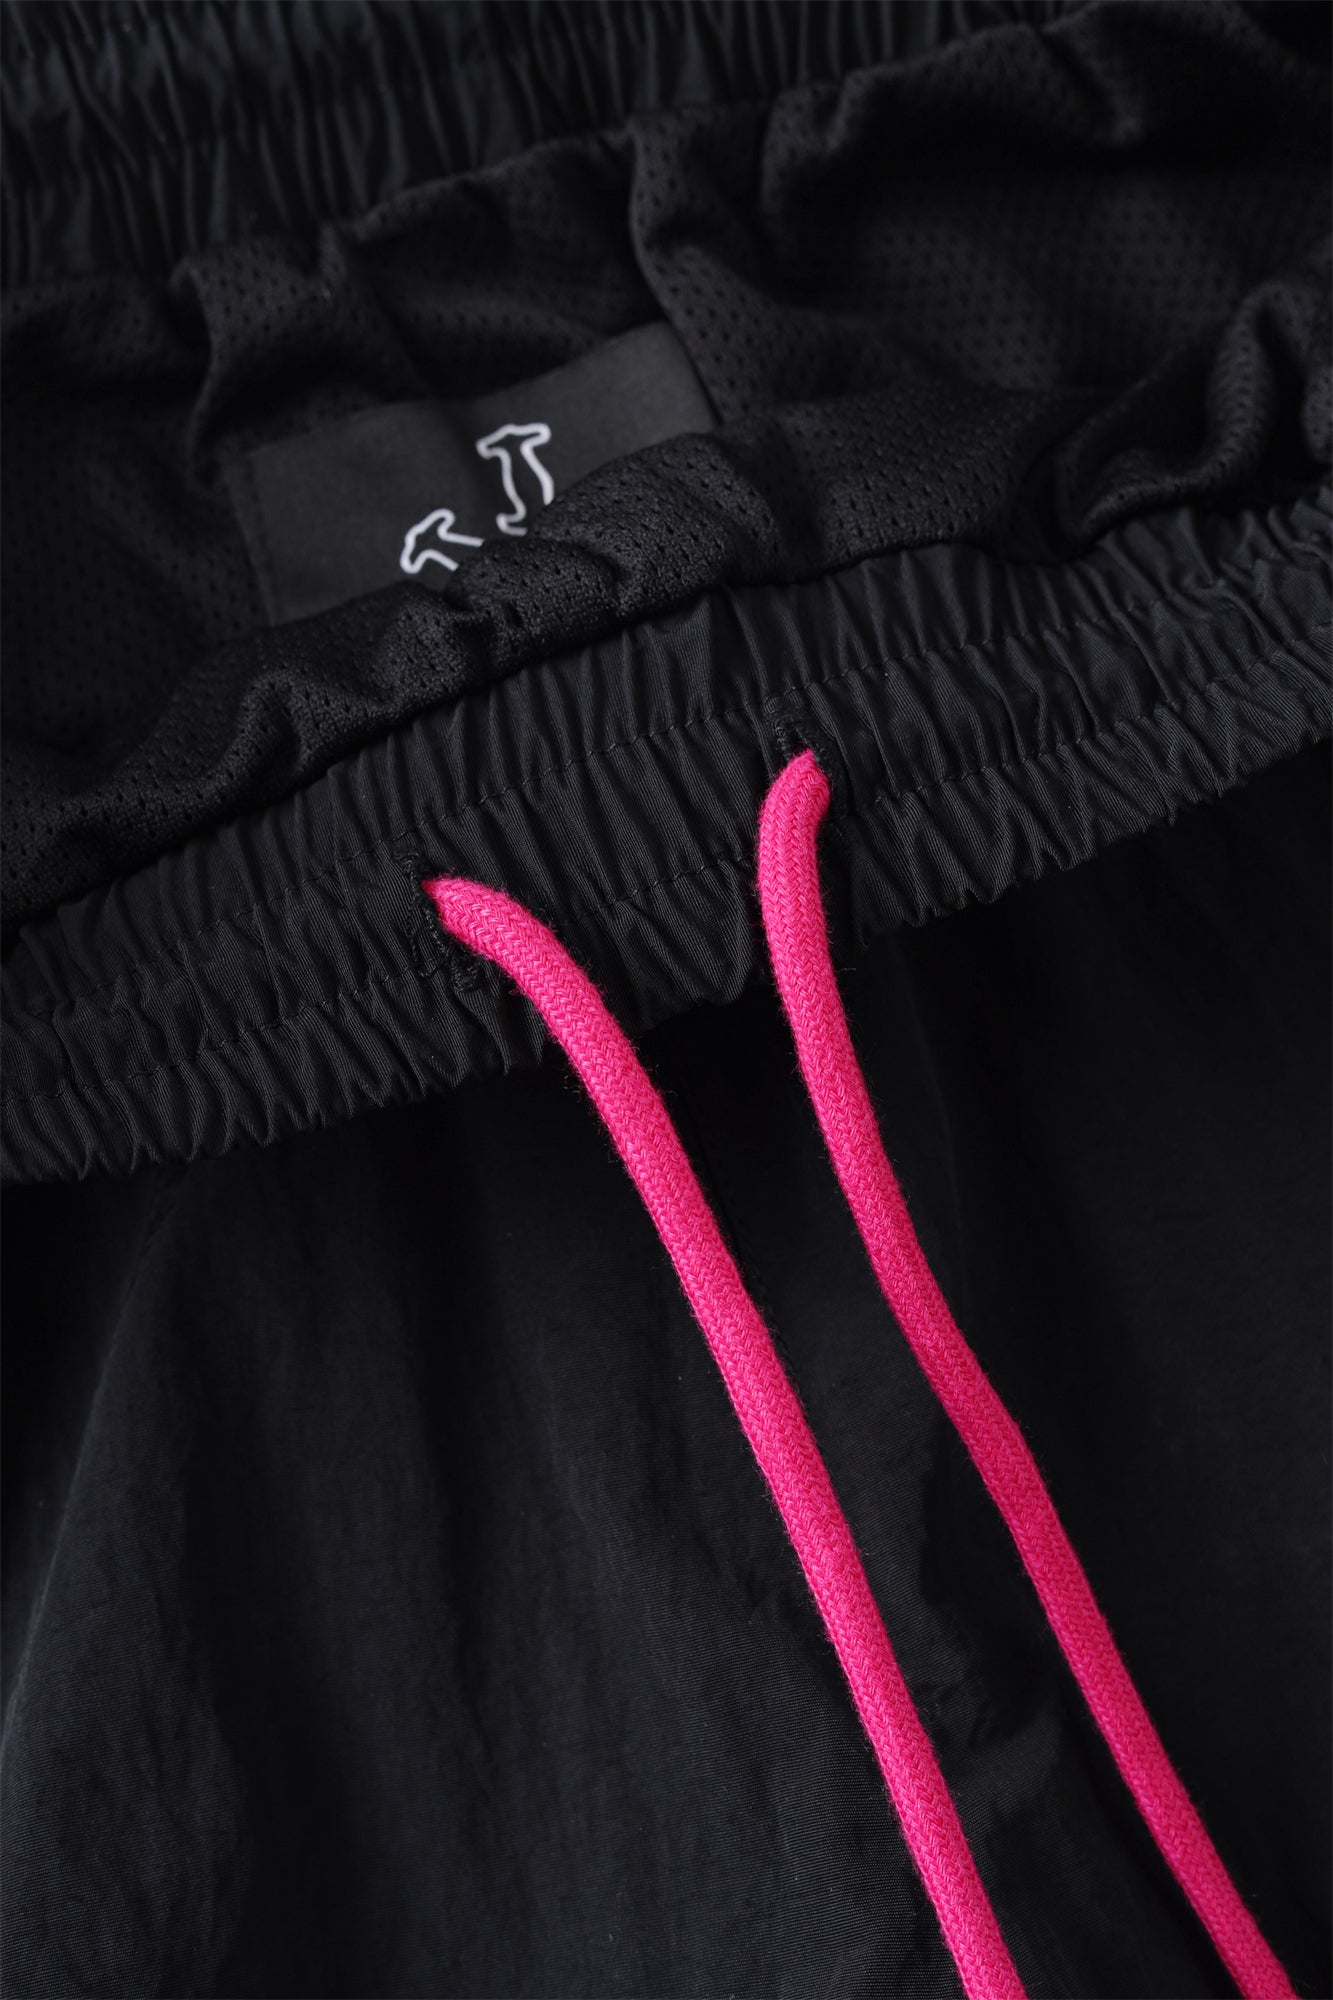 No Brand Joggers Women's Size XL Lot of 2 Hem Zippers Black Pink